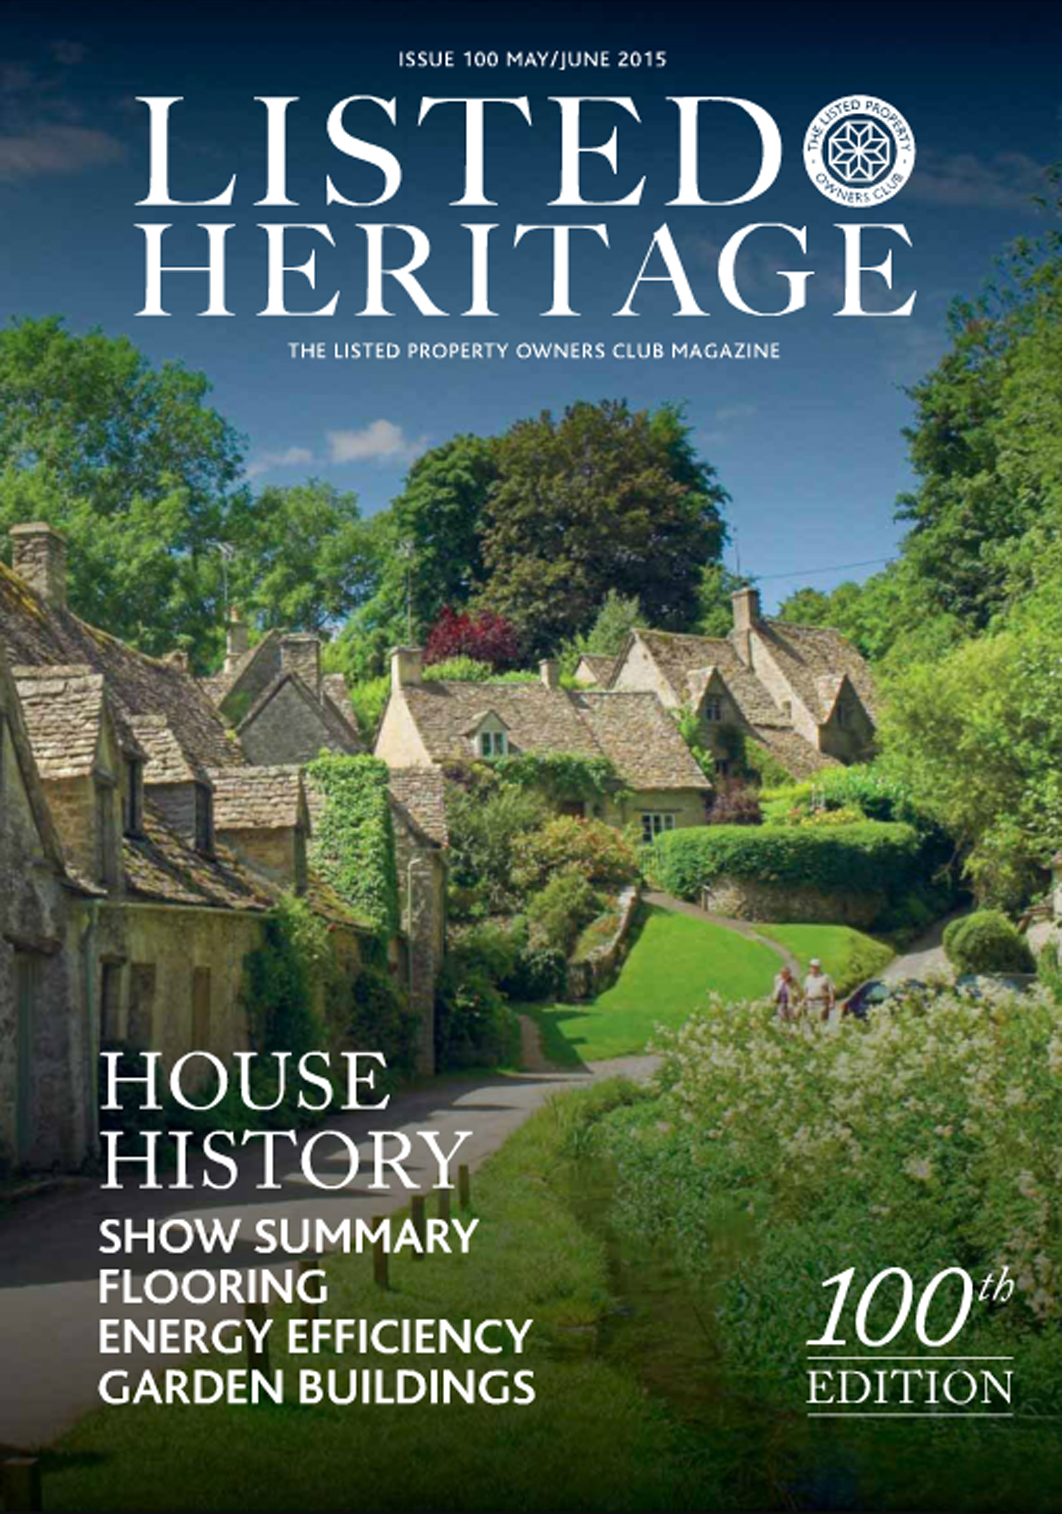 Listed Heritage magazine Kingham bespoke kitchen design feature May 2015